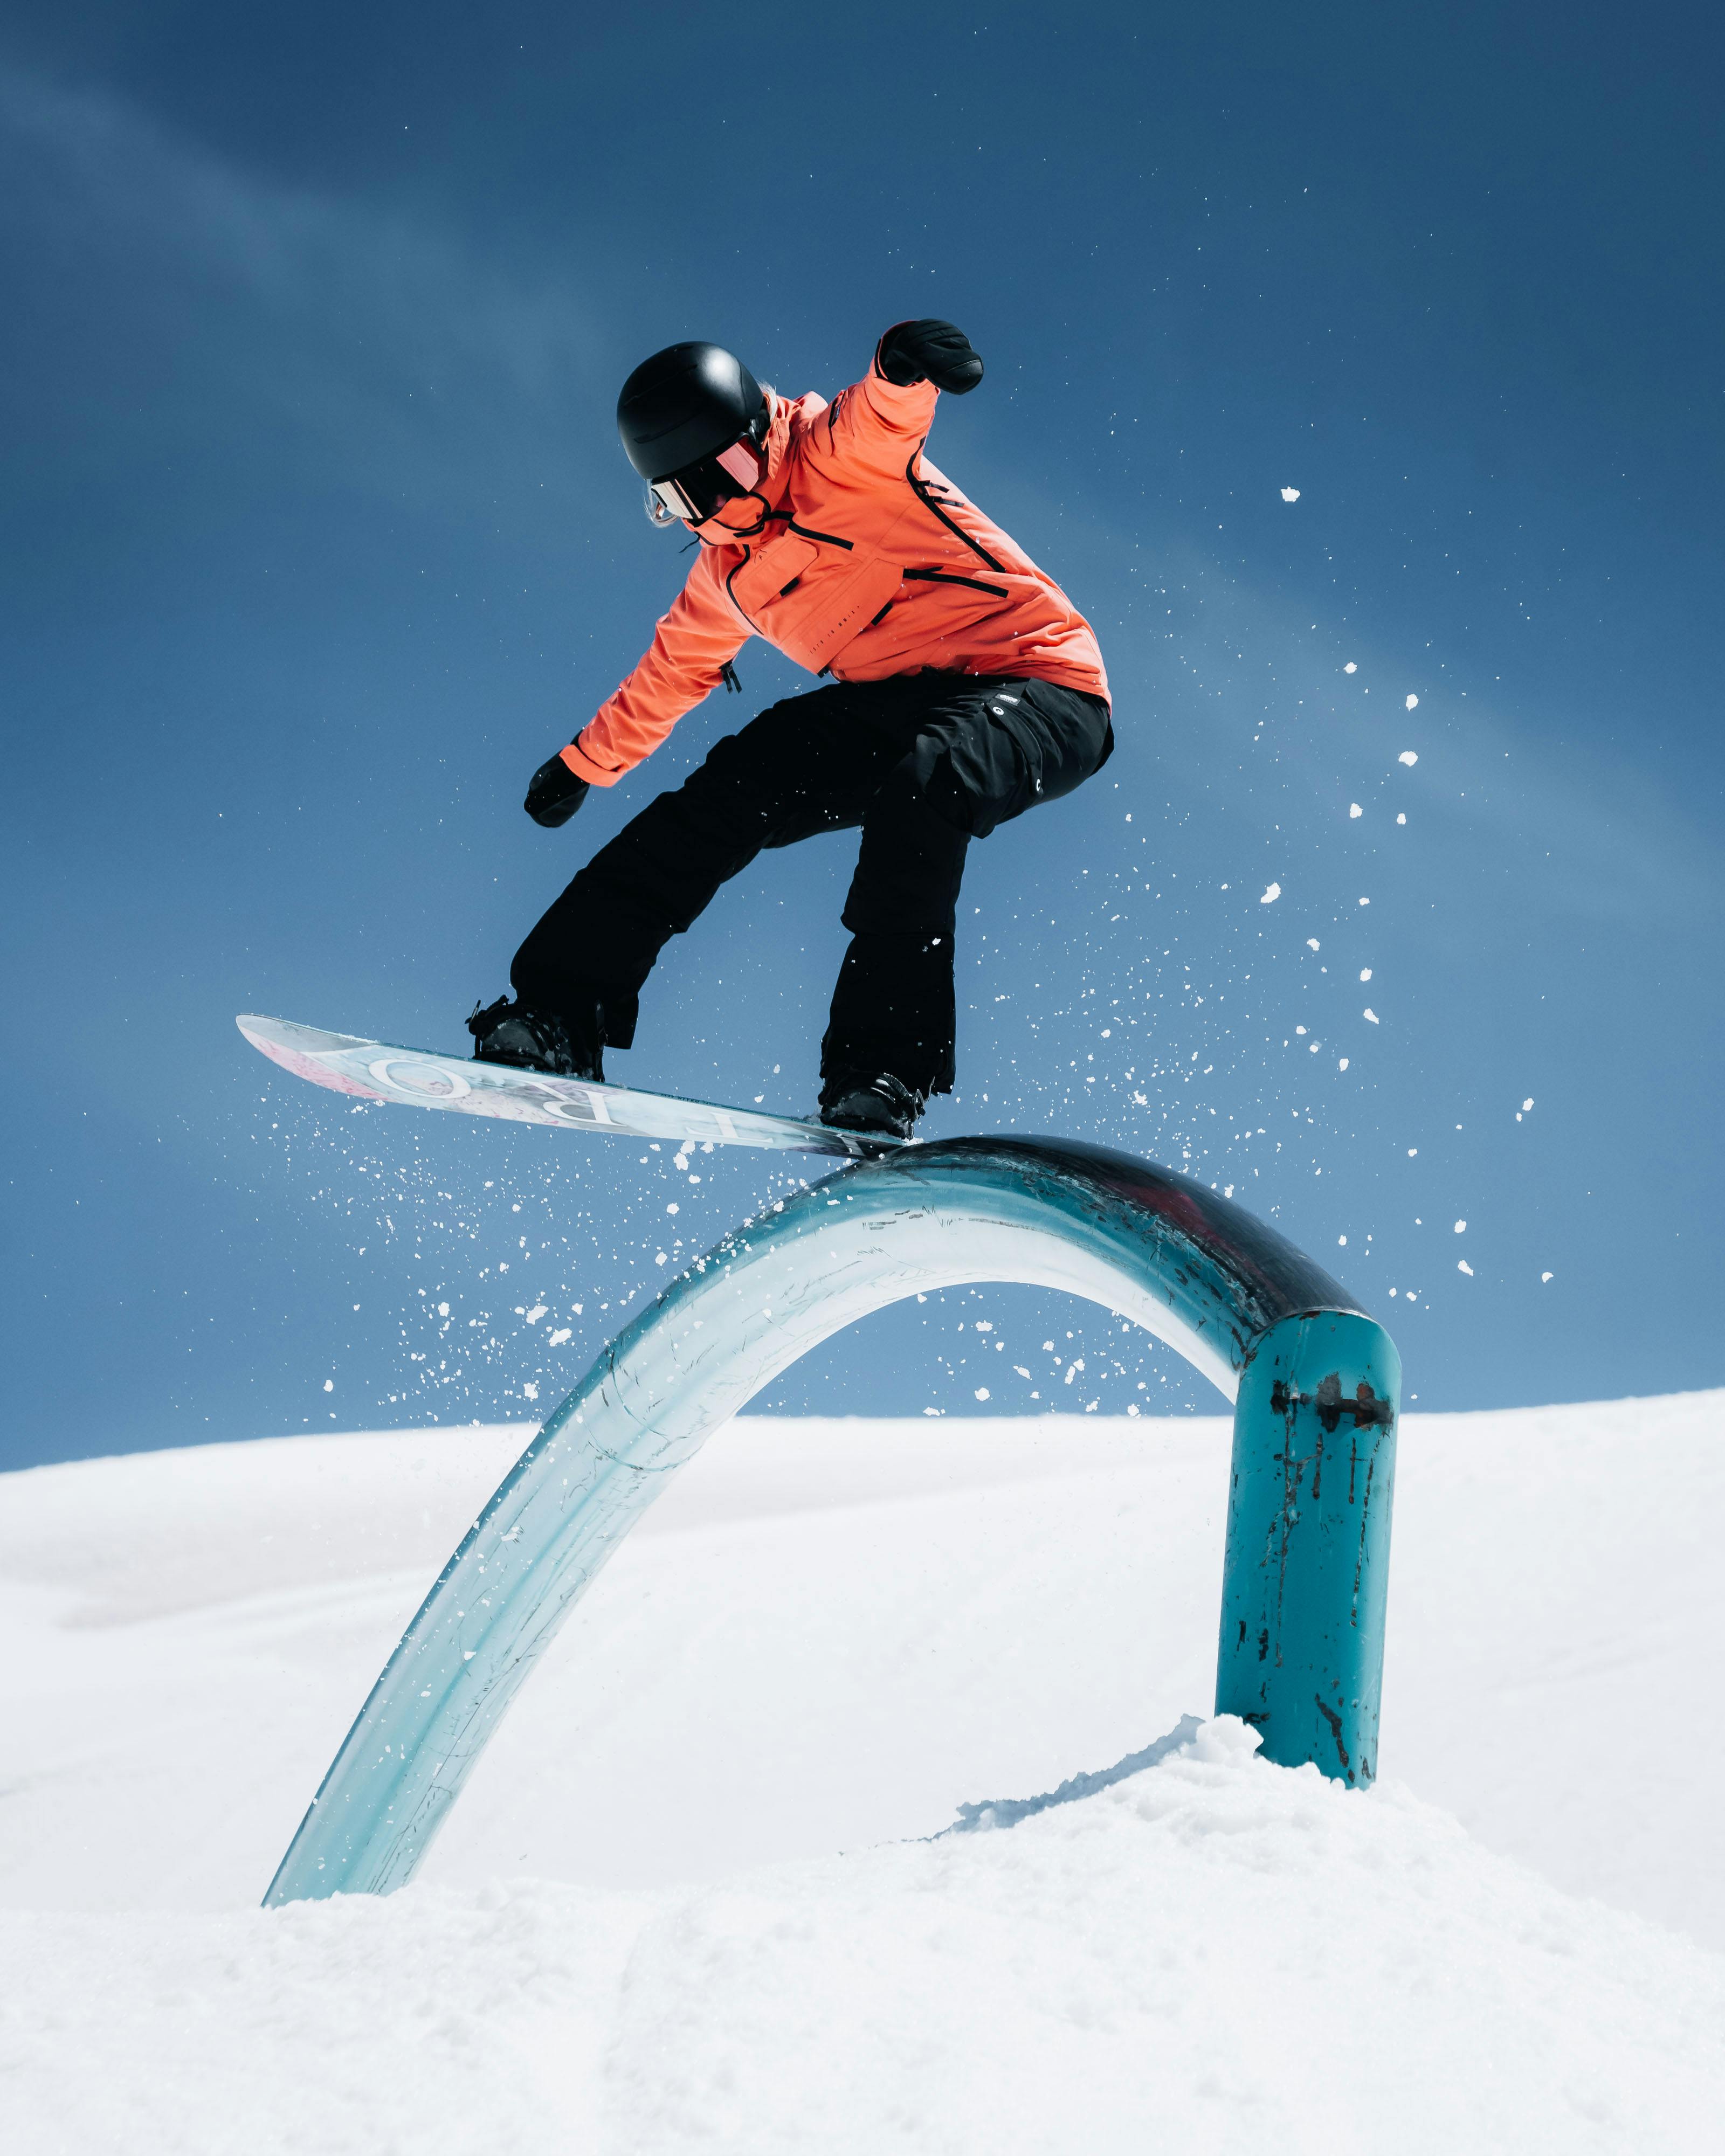 Snowboard edge de-tuning (Dulling)